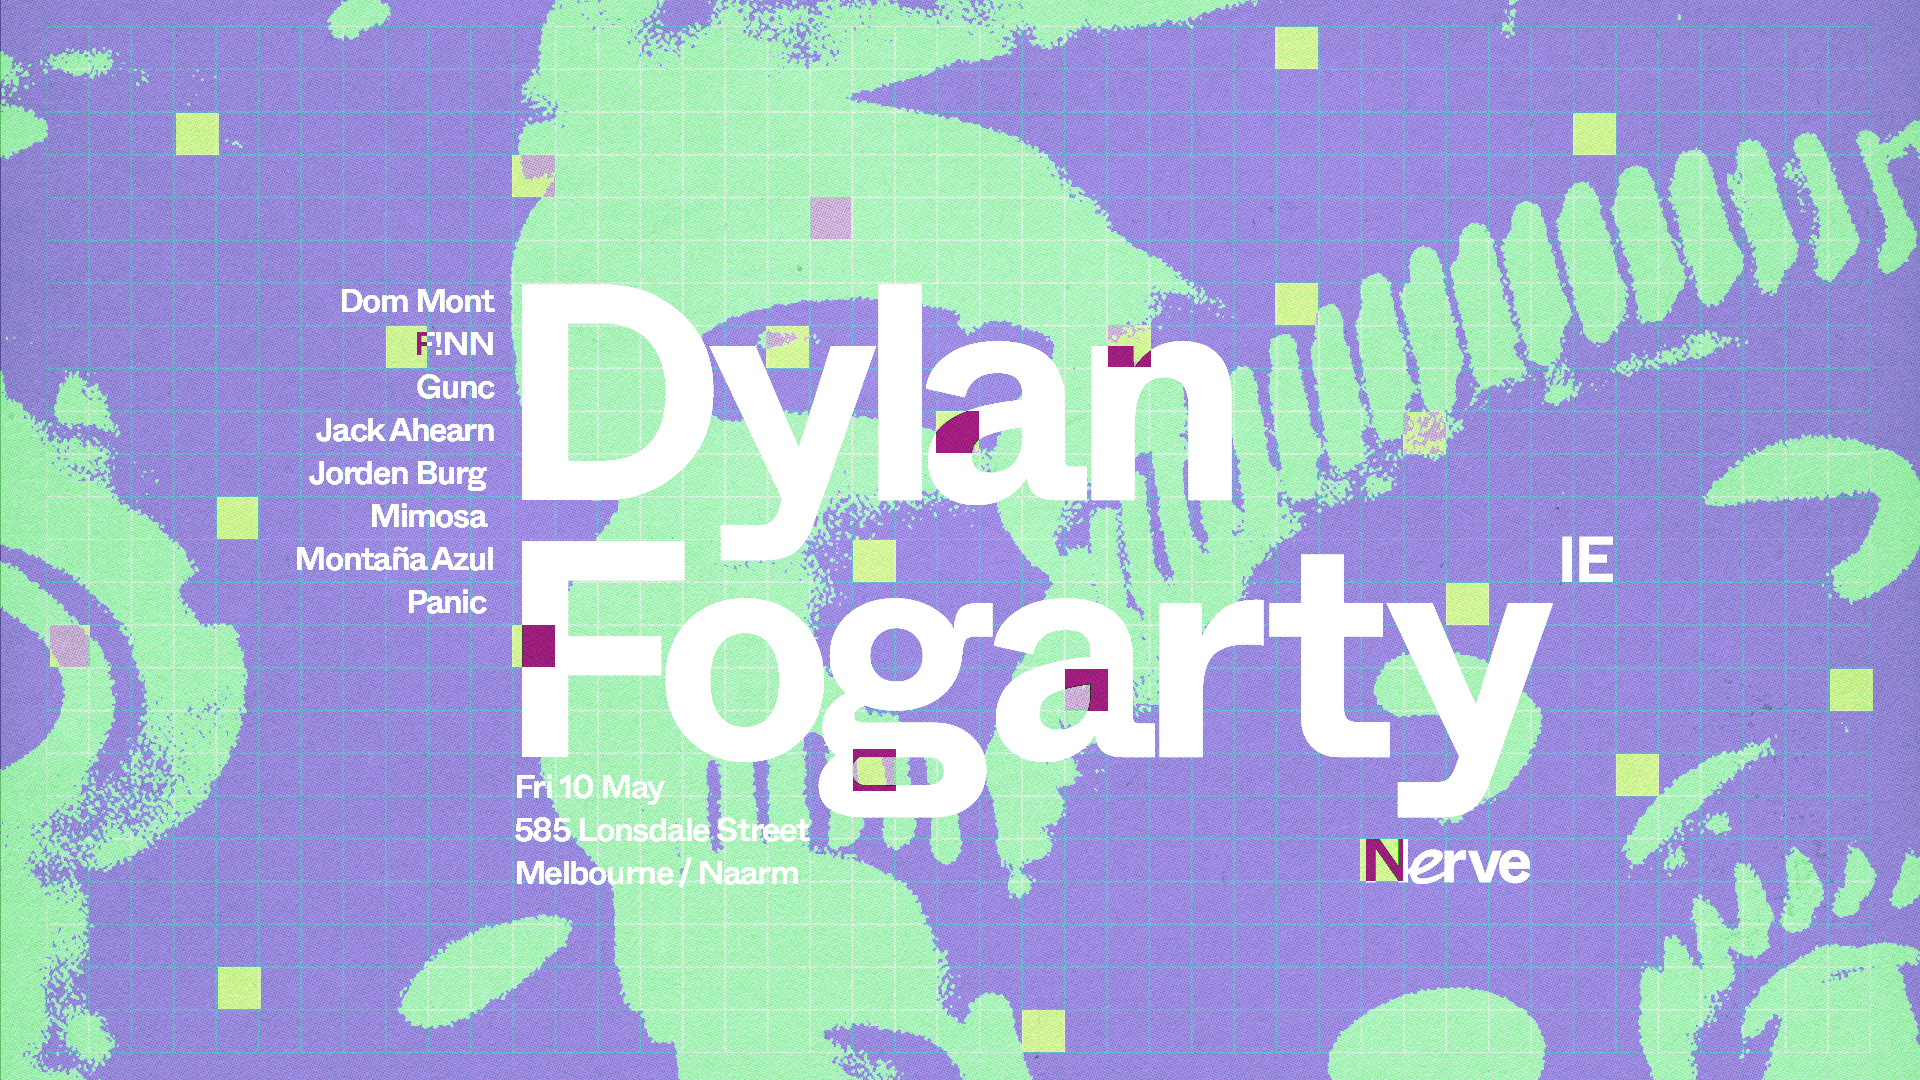 Nerve - Dylan Fogarty (IE)